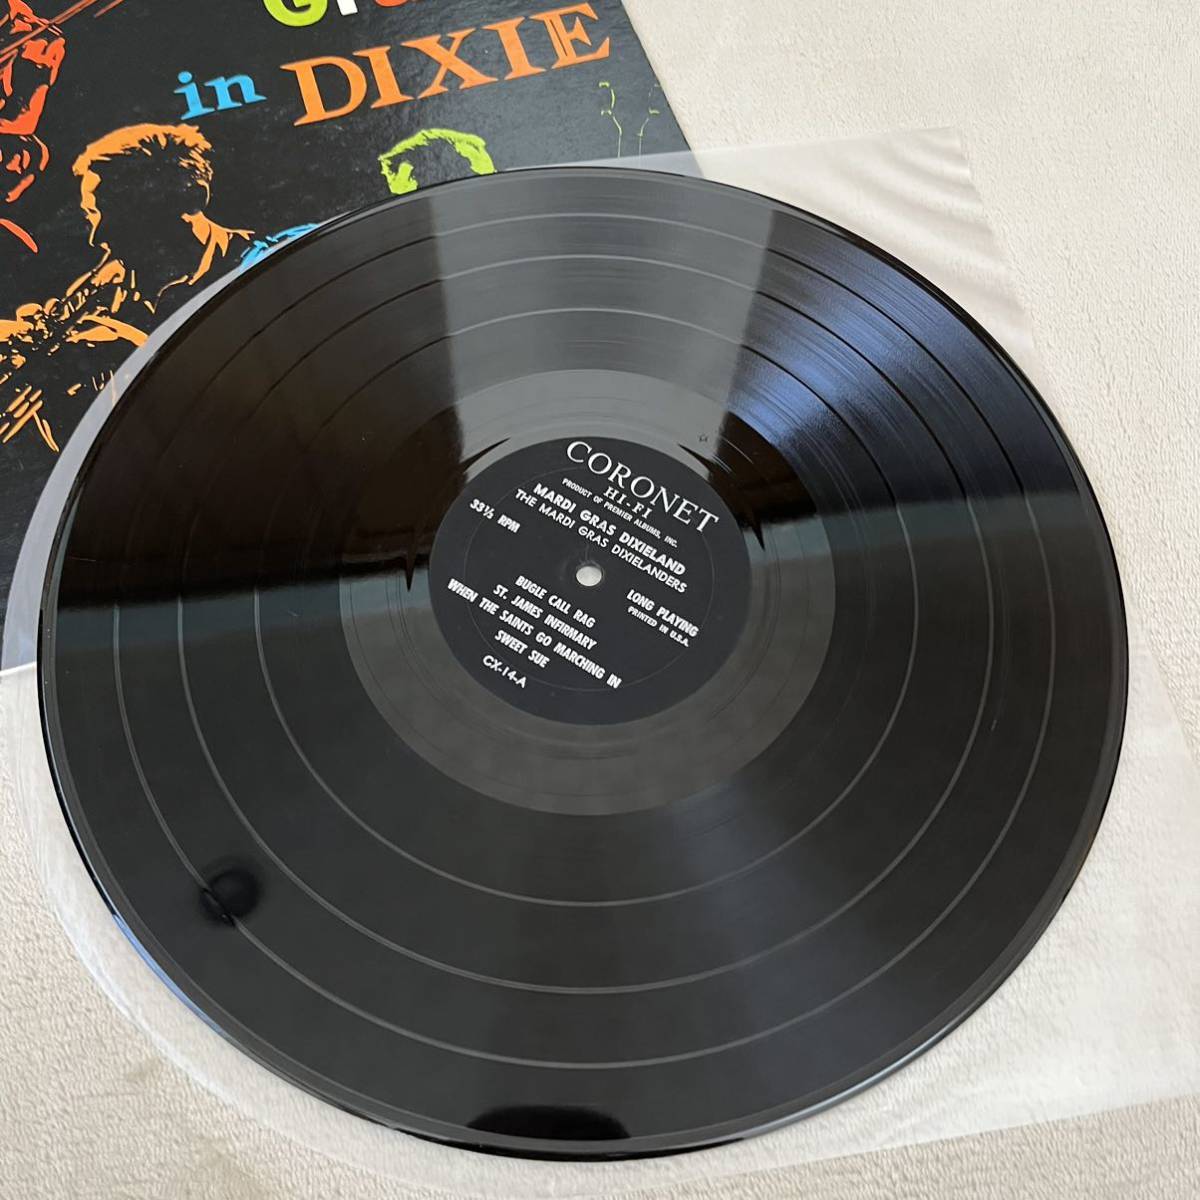 【US盤米盤】MARDI GRAS in DIXIE マルディグラインディキシー BUGLE CALL RAG ST. JAMES INFIRMARY / LP レコード / CX-14 / ジャズ /_画像7